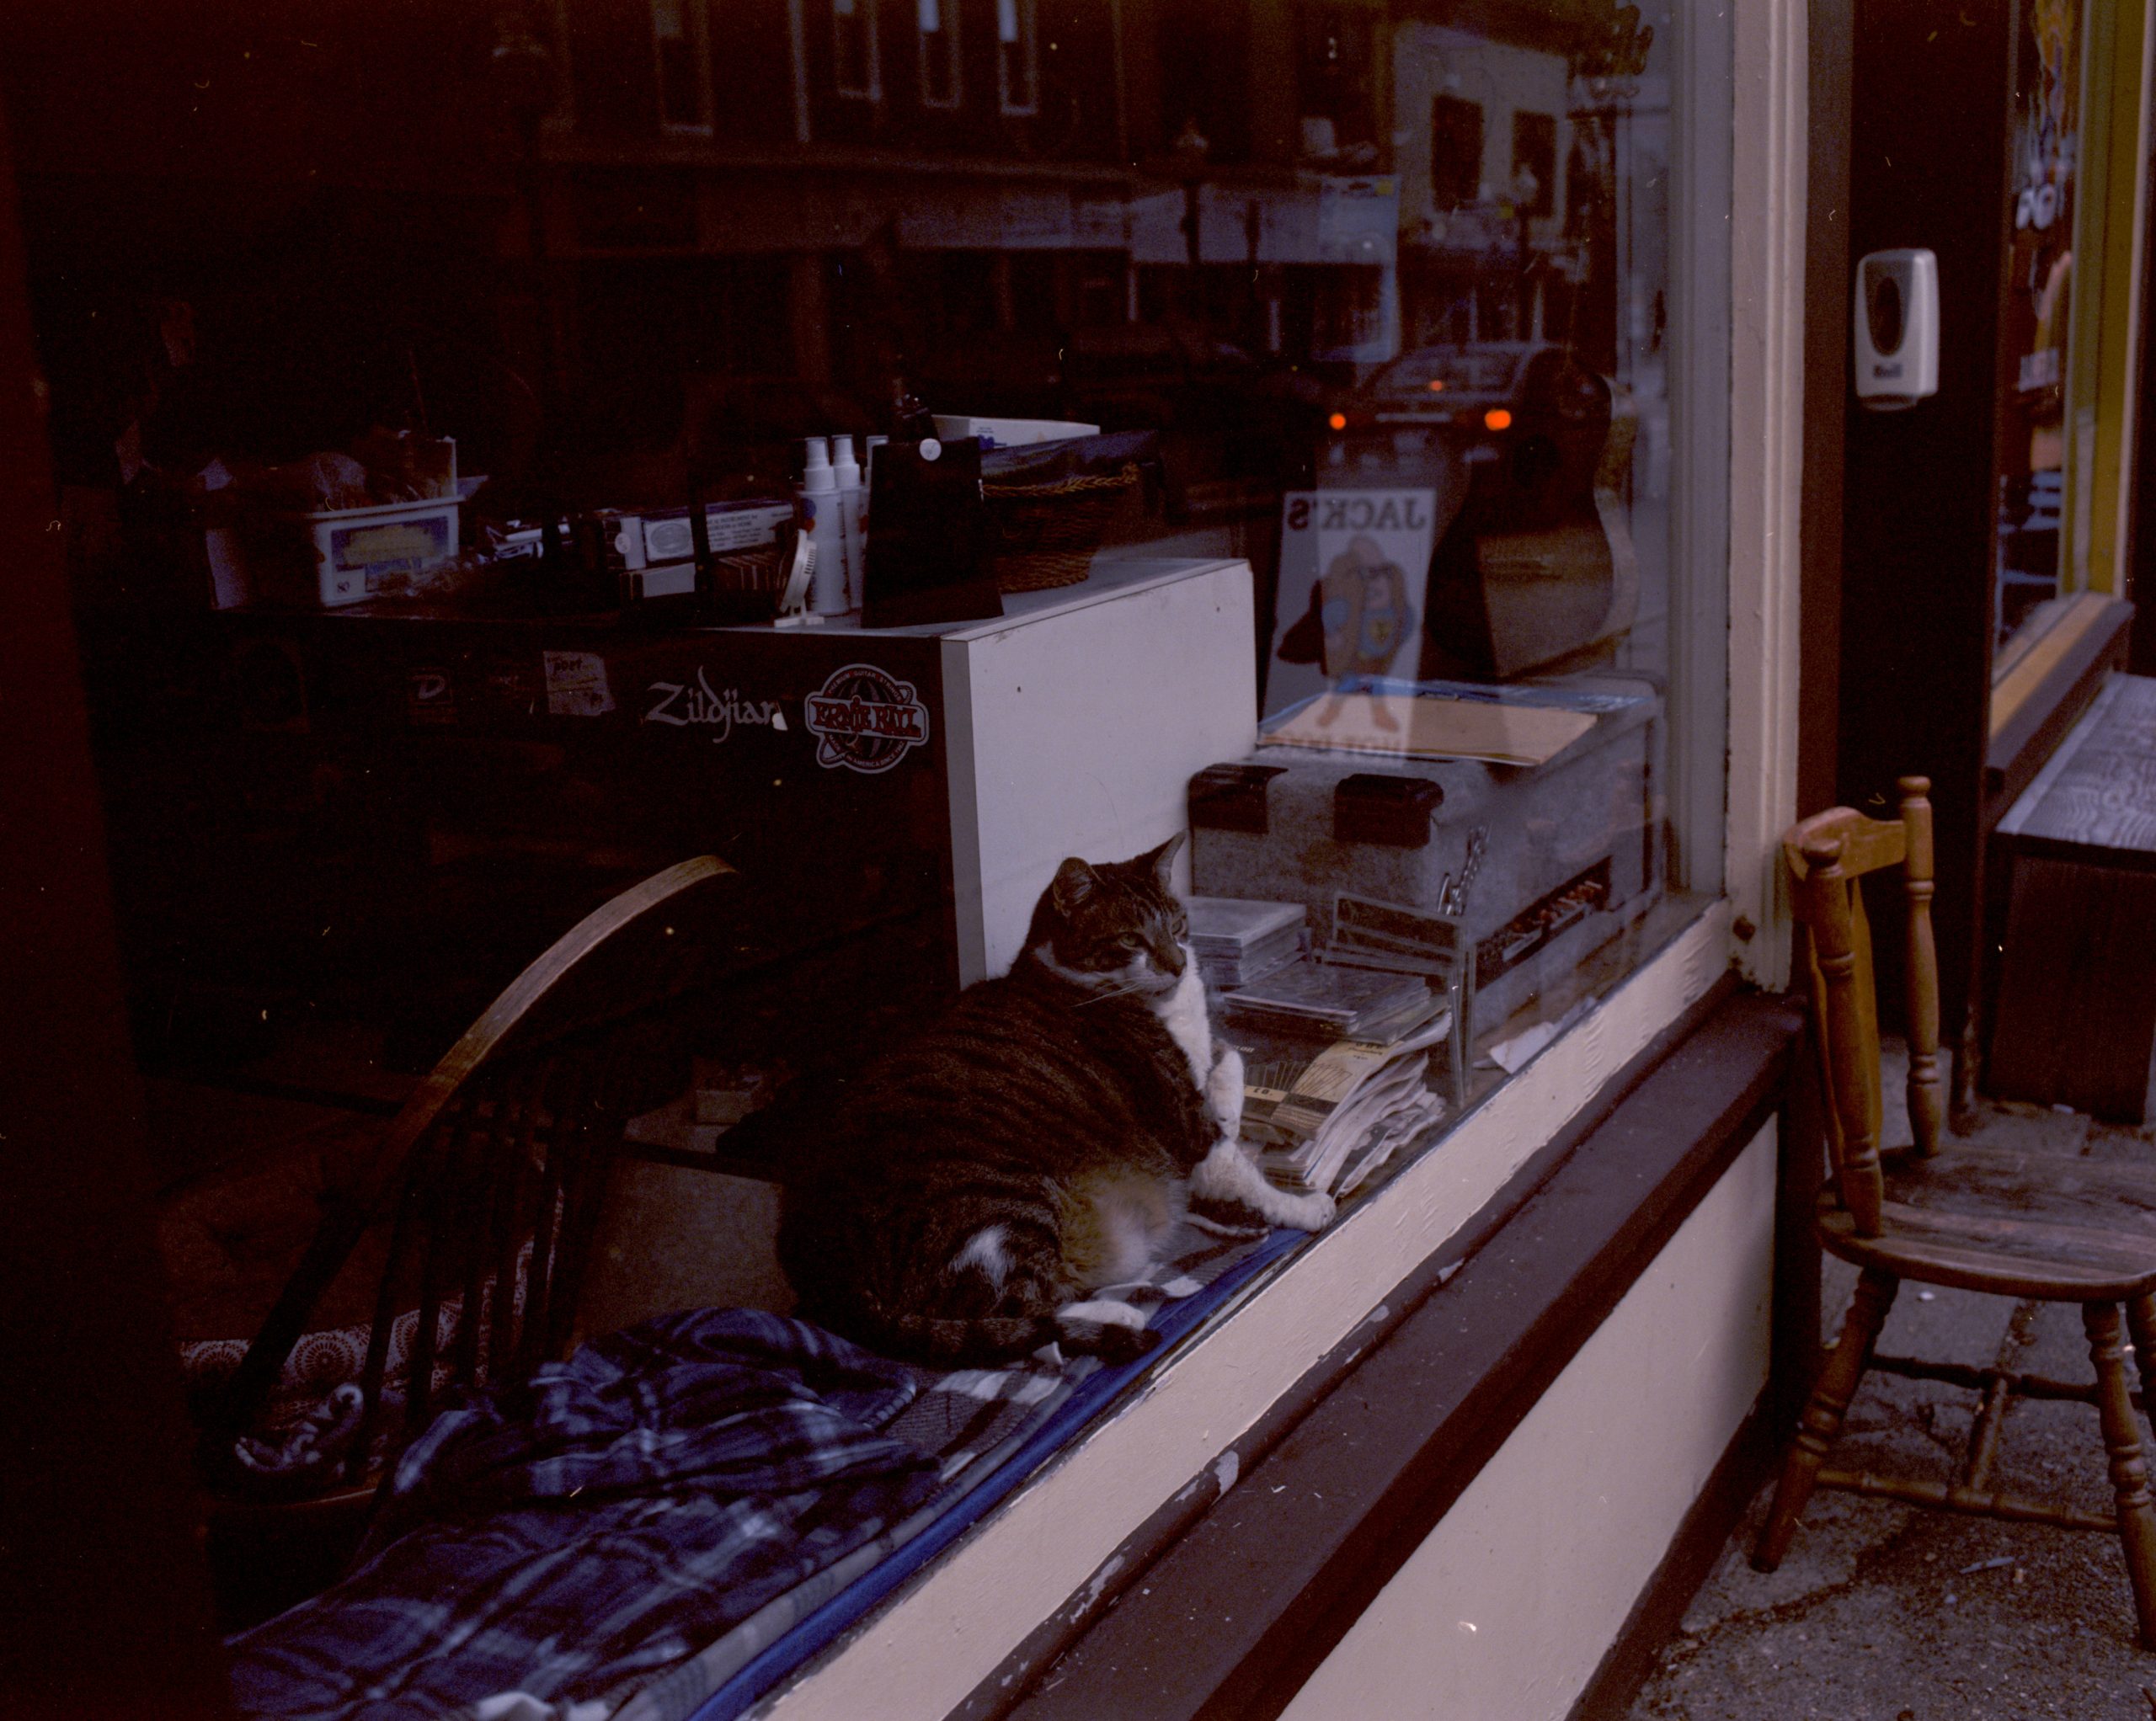 Junk Store Cat, North Adams, MA. 2021